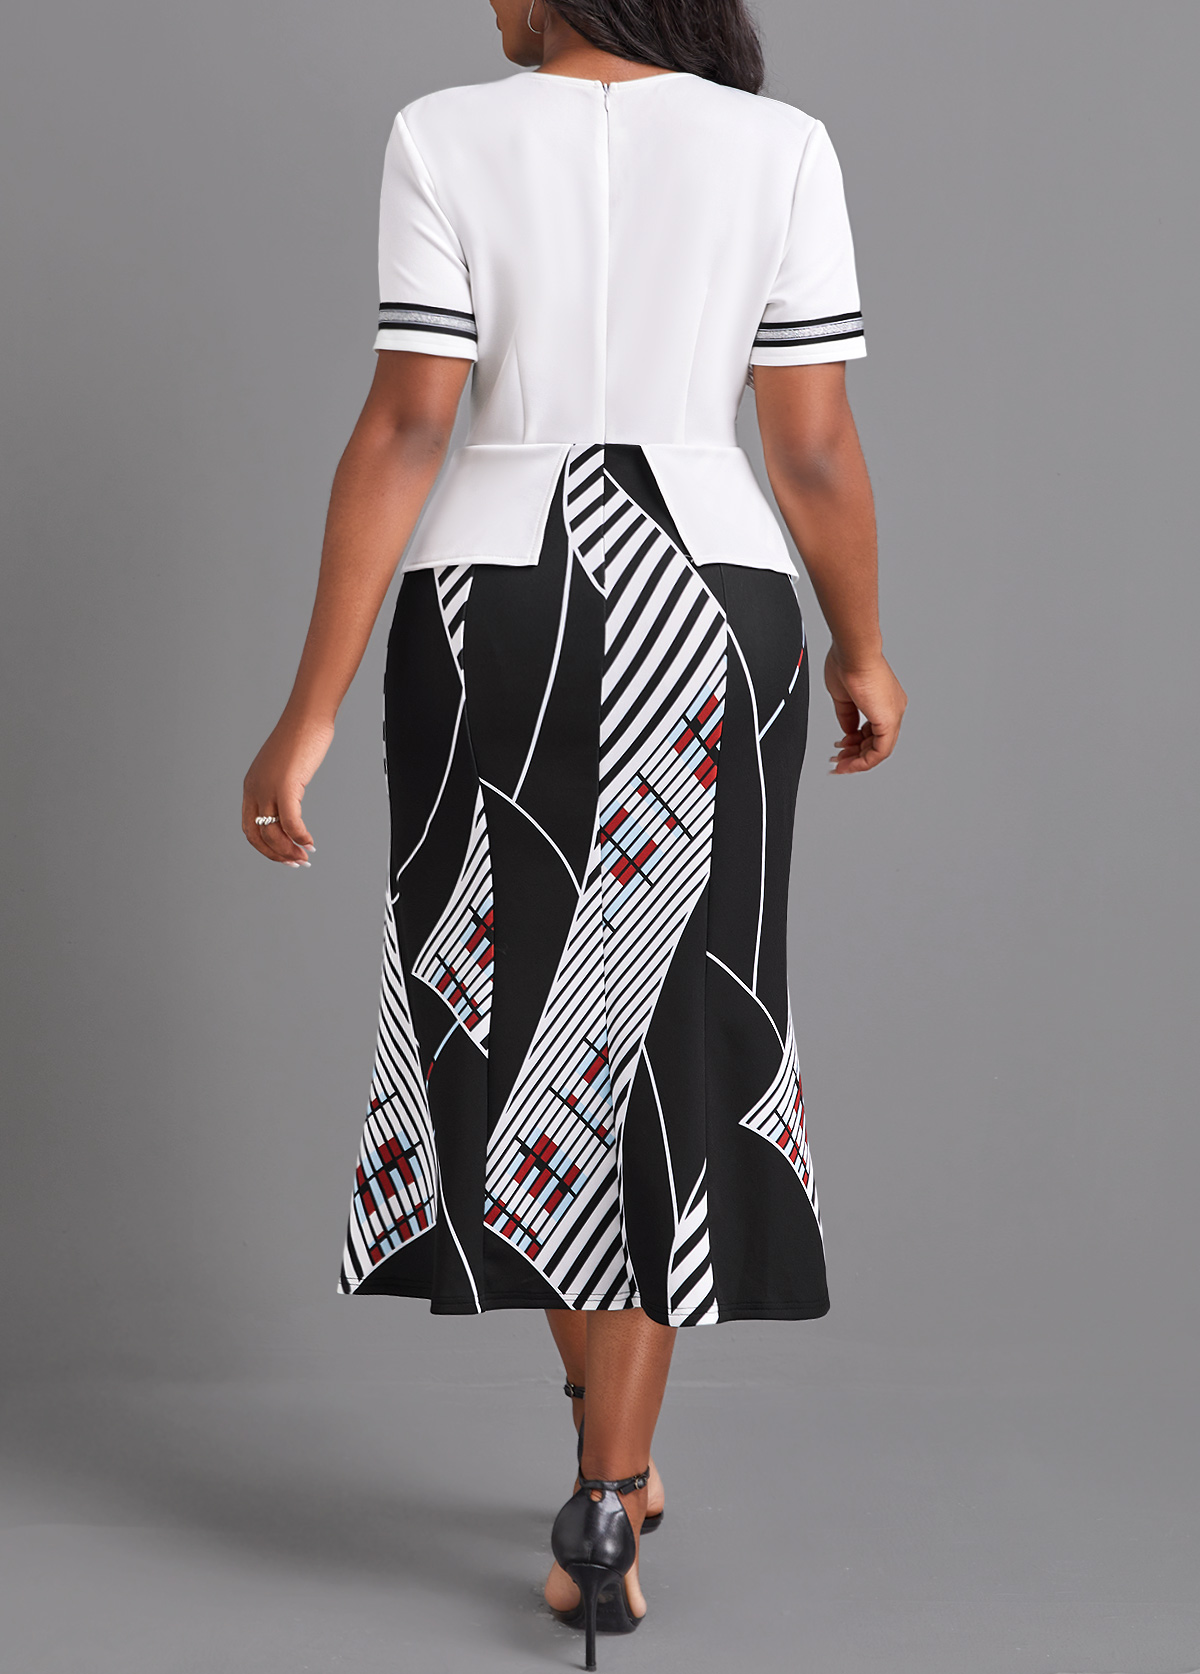 Geometric Print Contrast Binding White Bodycon Dress